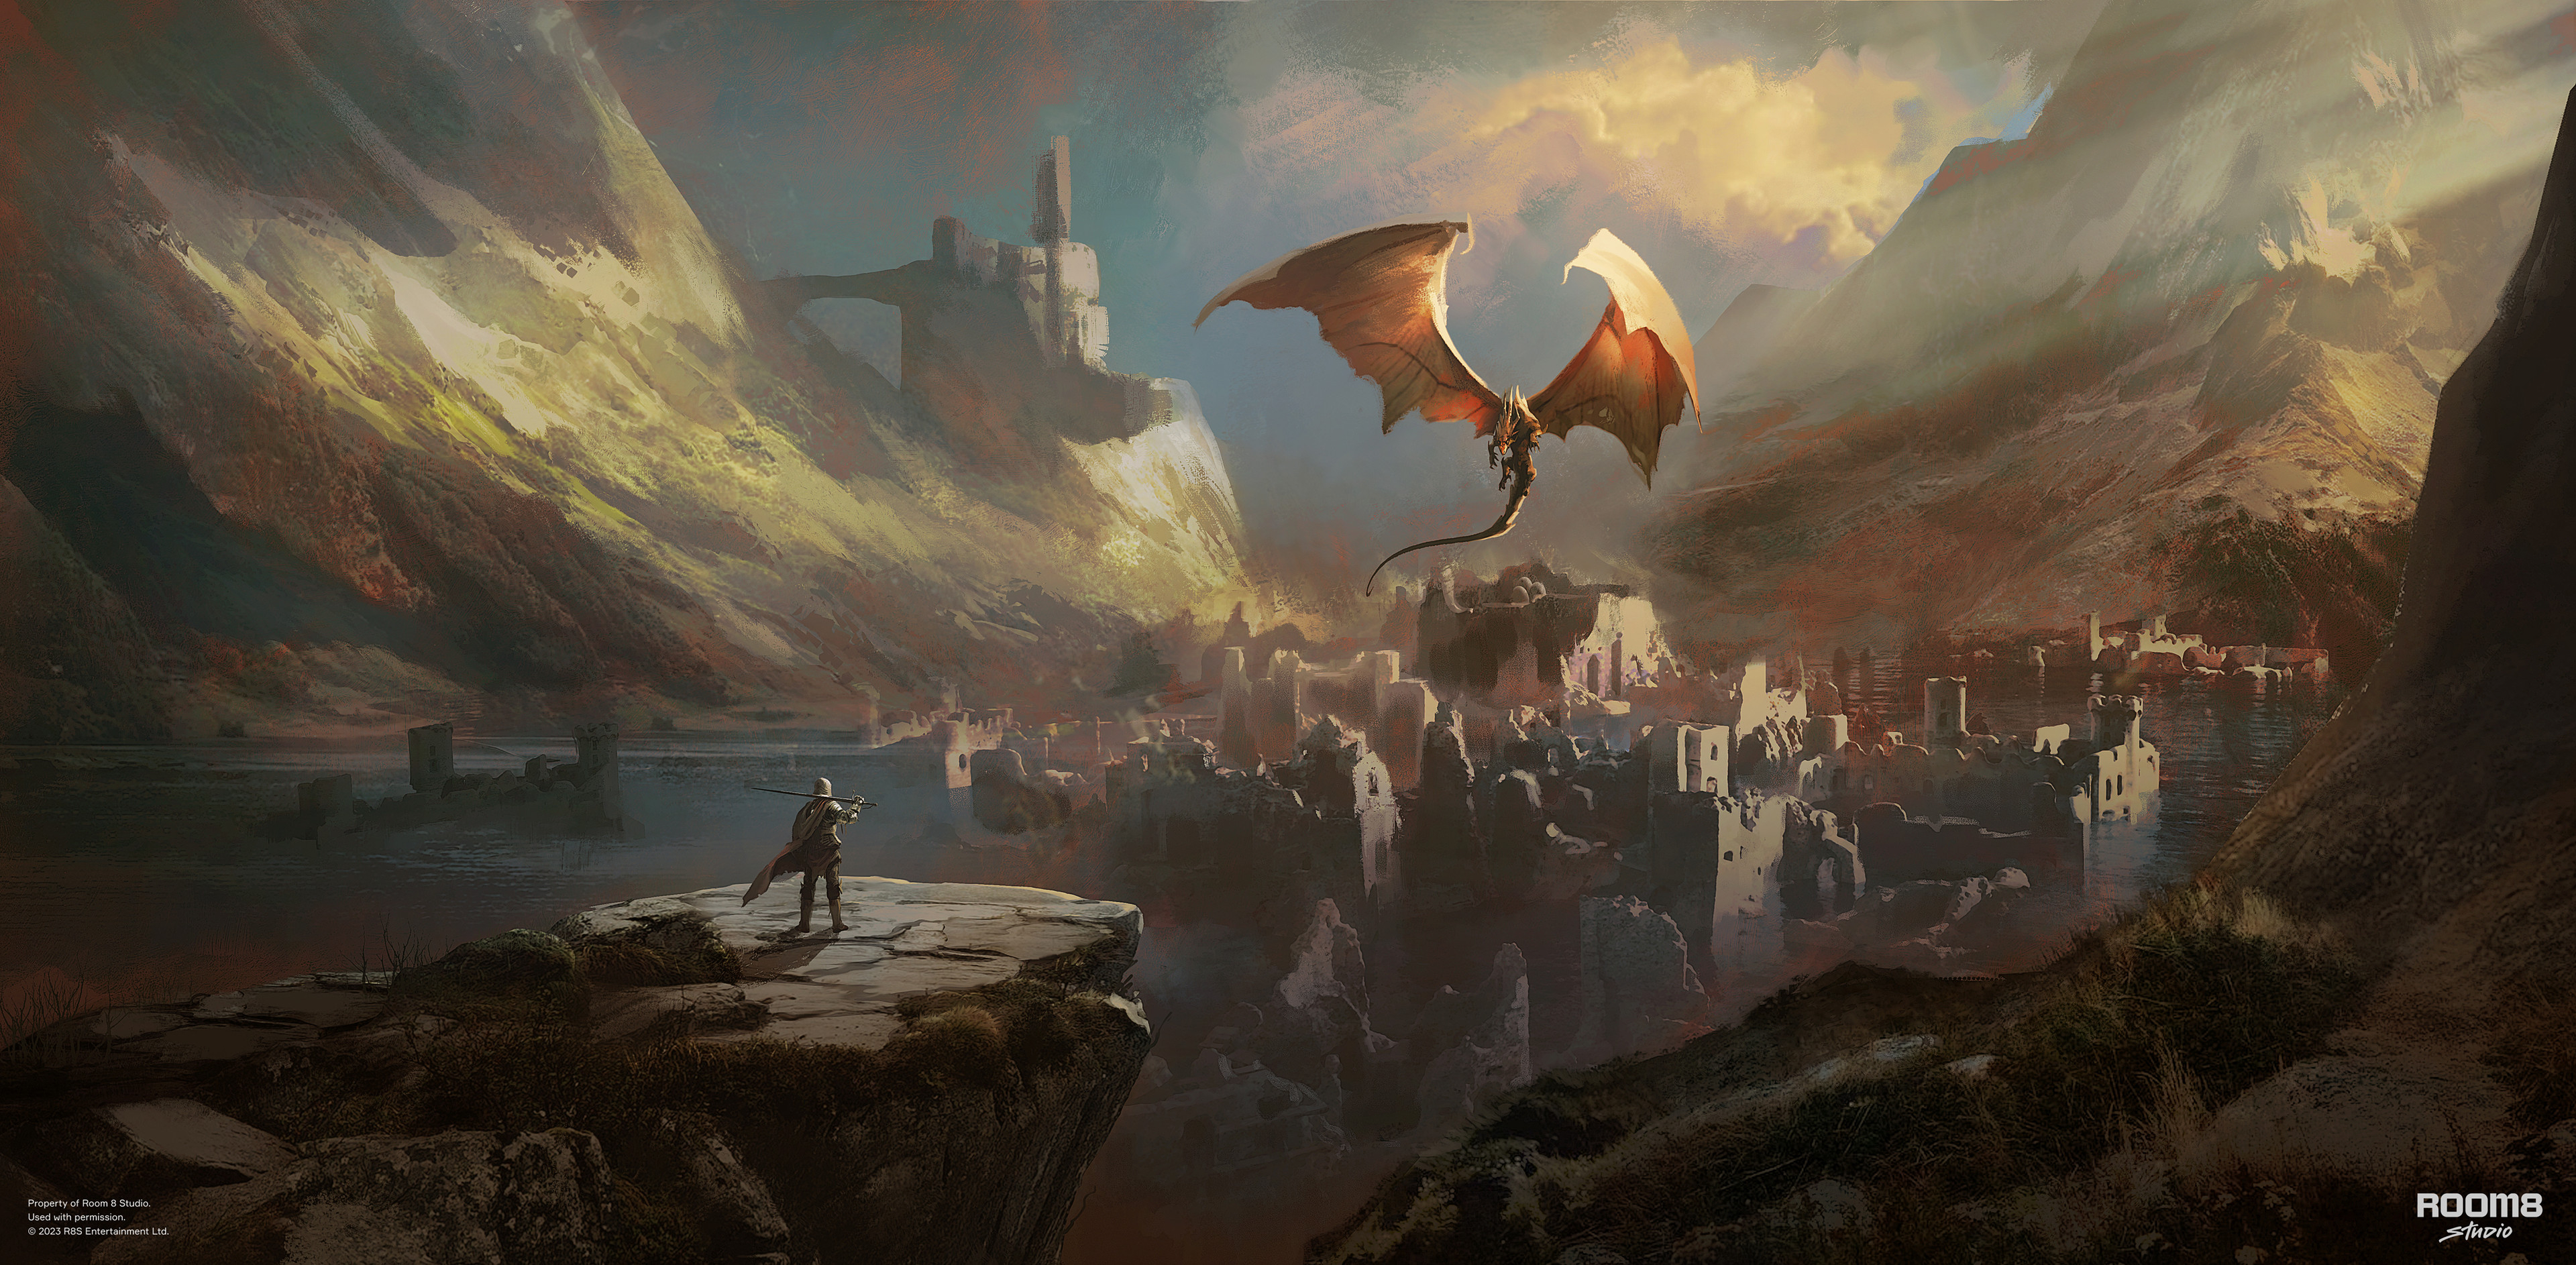 fantasy dragon desktop wallpaper